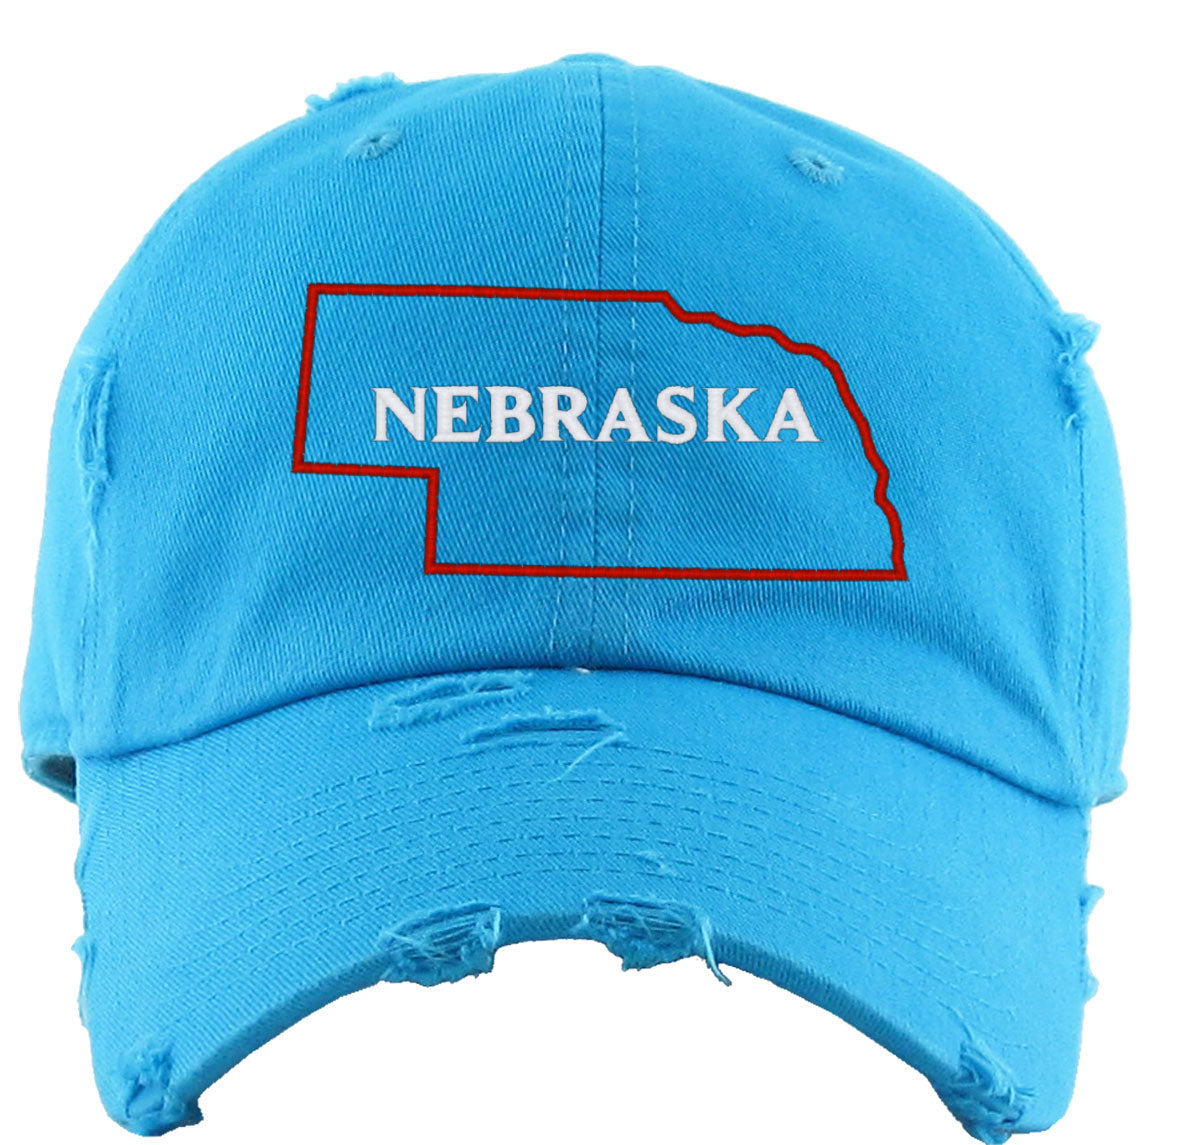 Nebraska Vintage Baseball Cap